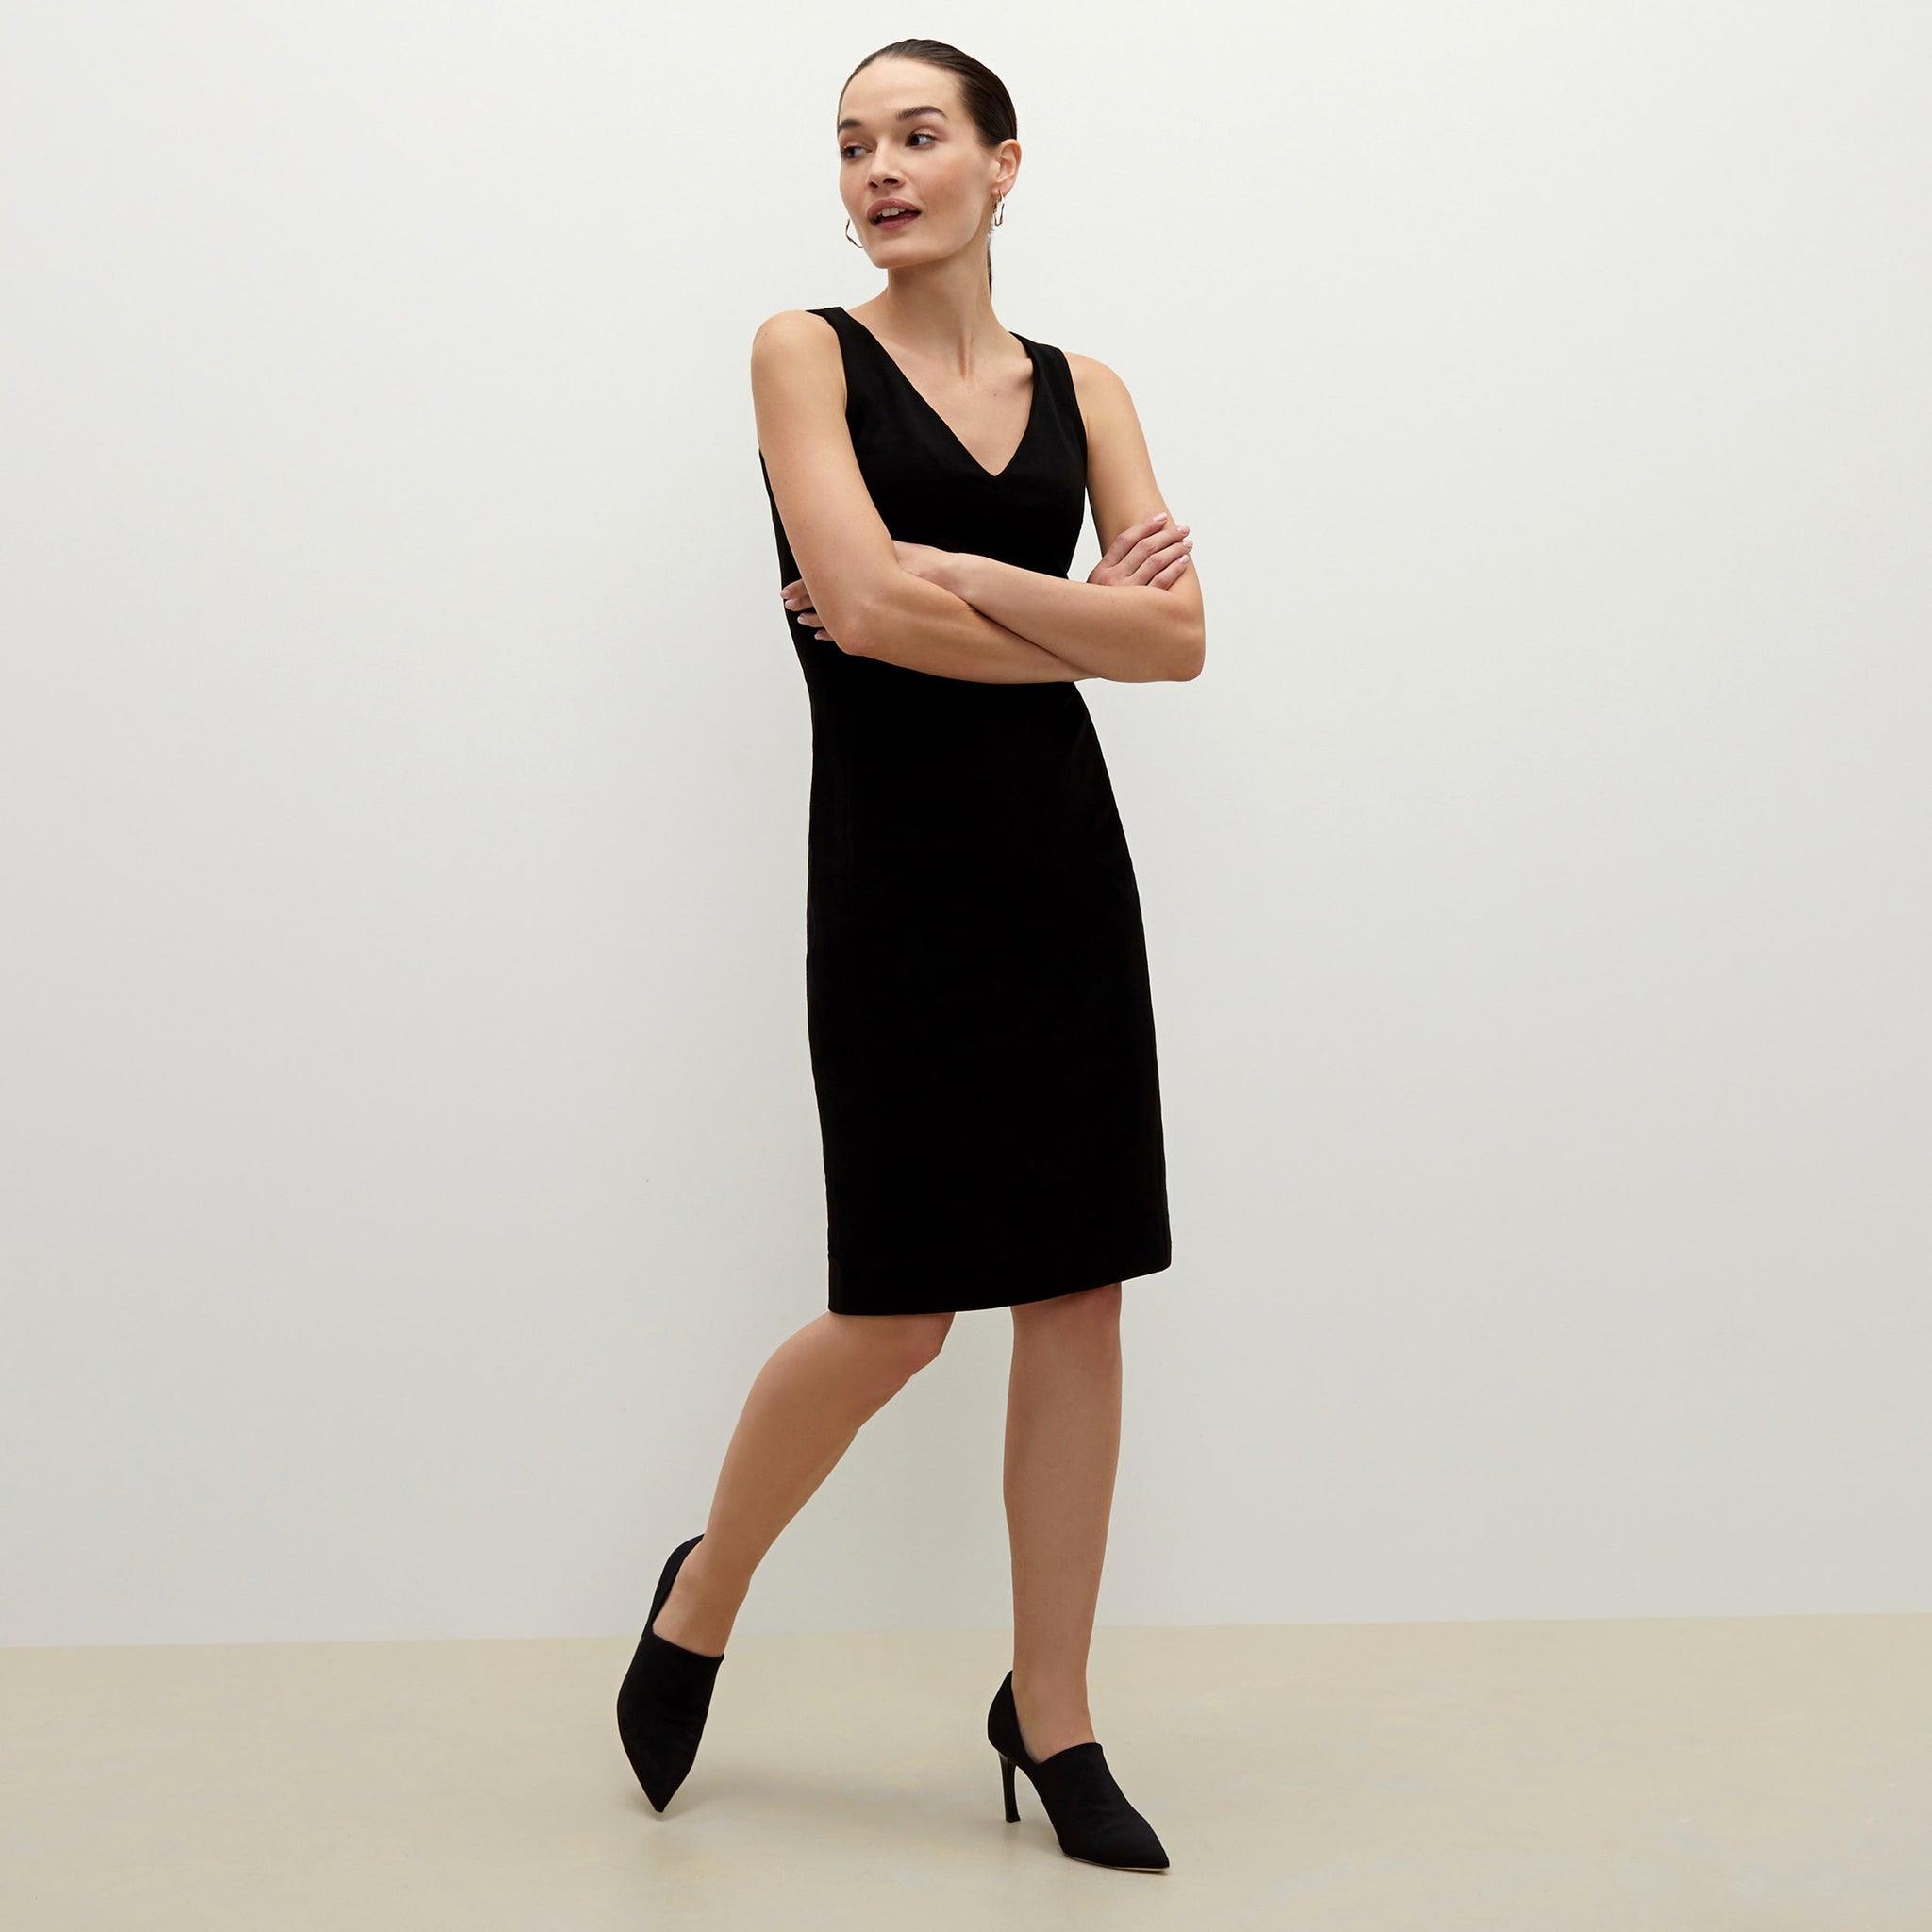 Side image of a woman standing wearing the Rachel dress in black